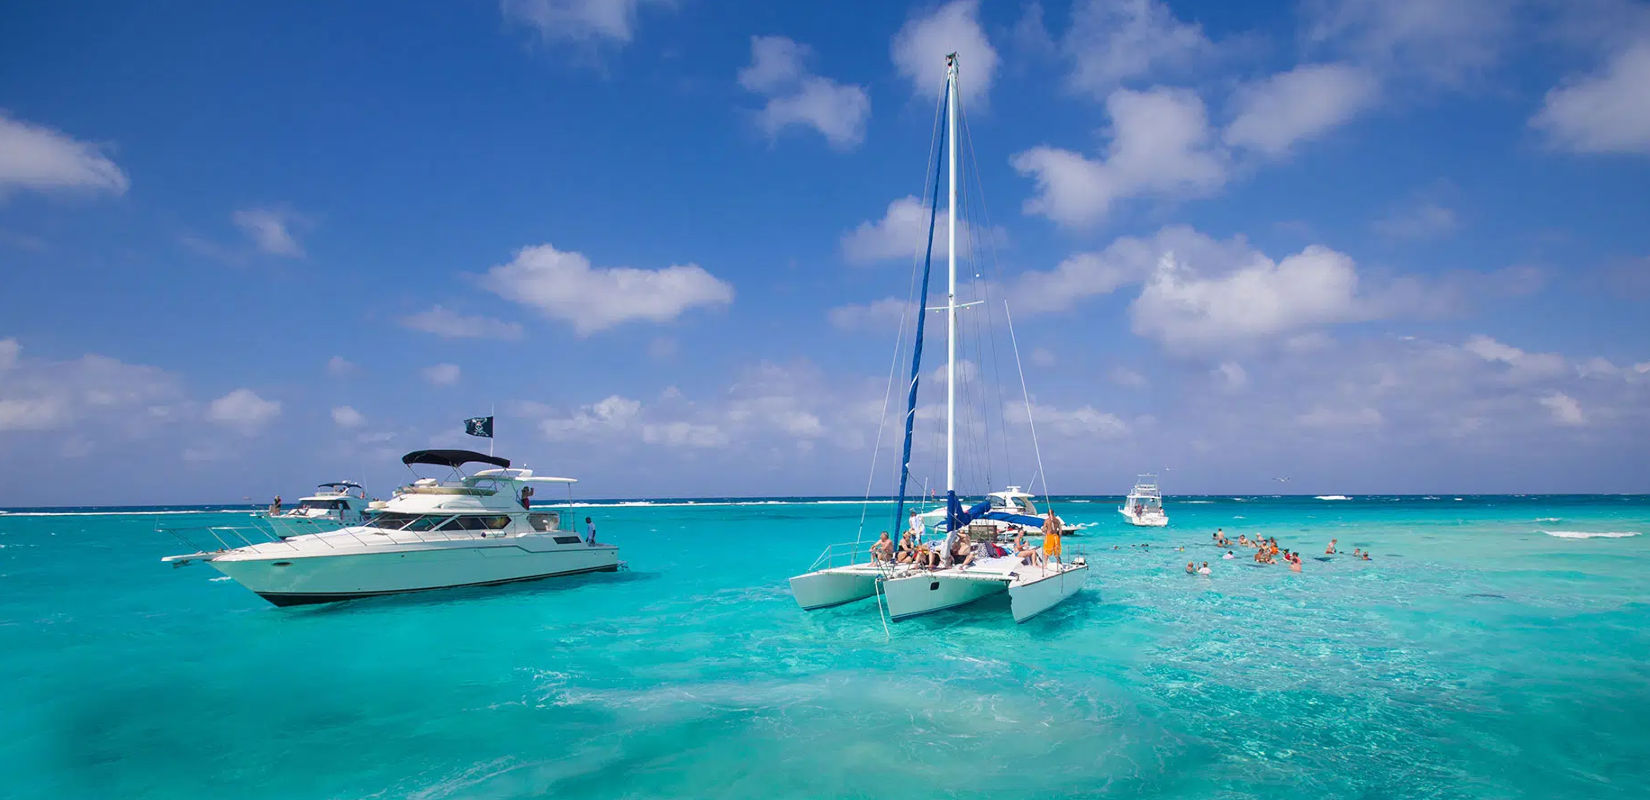 Punta Cana Yacht Rentals